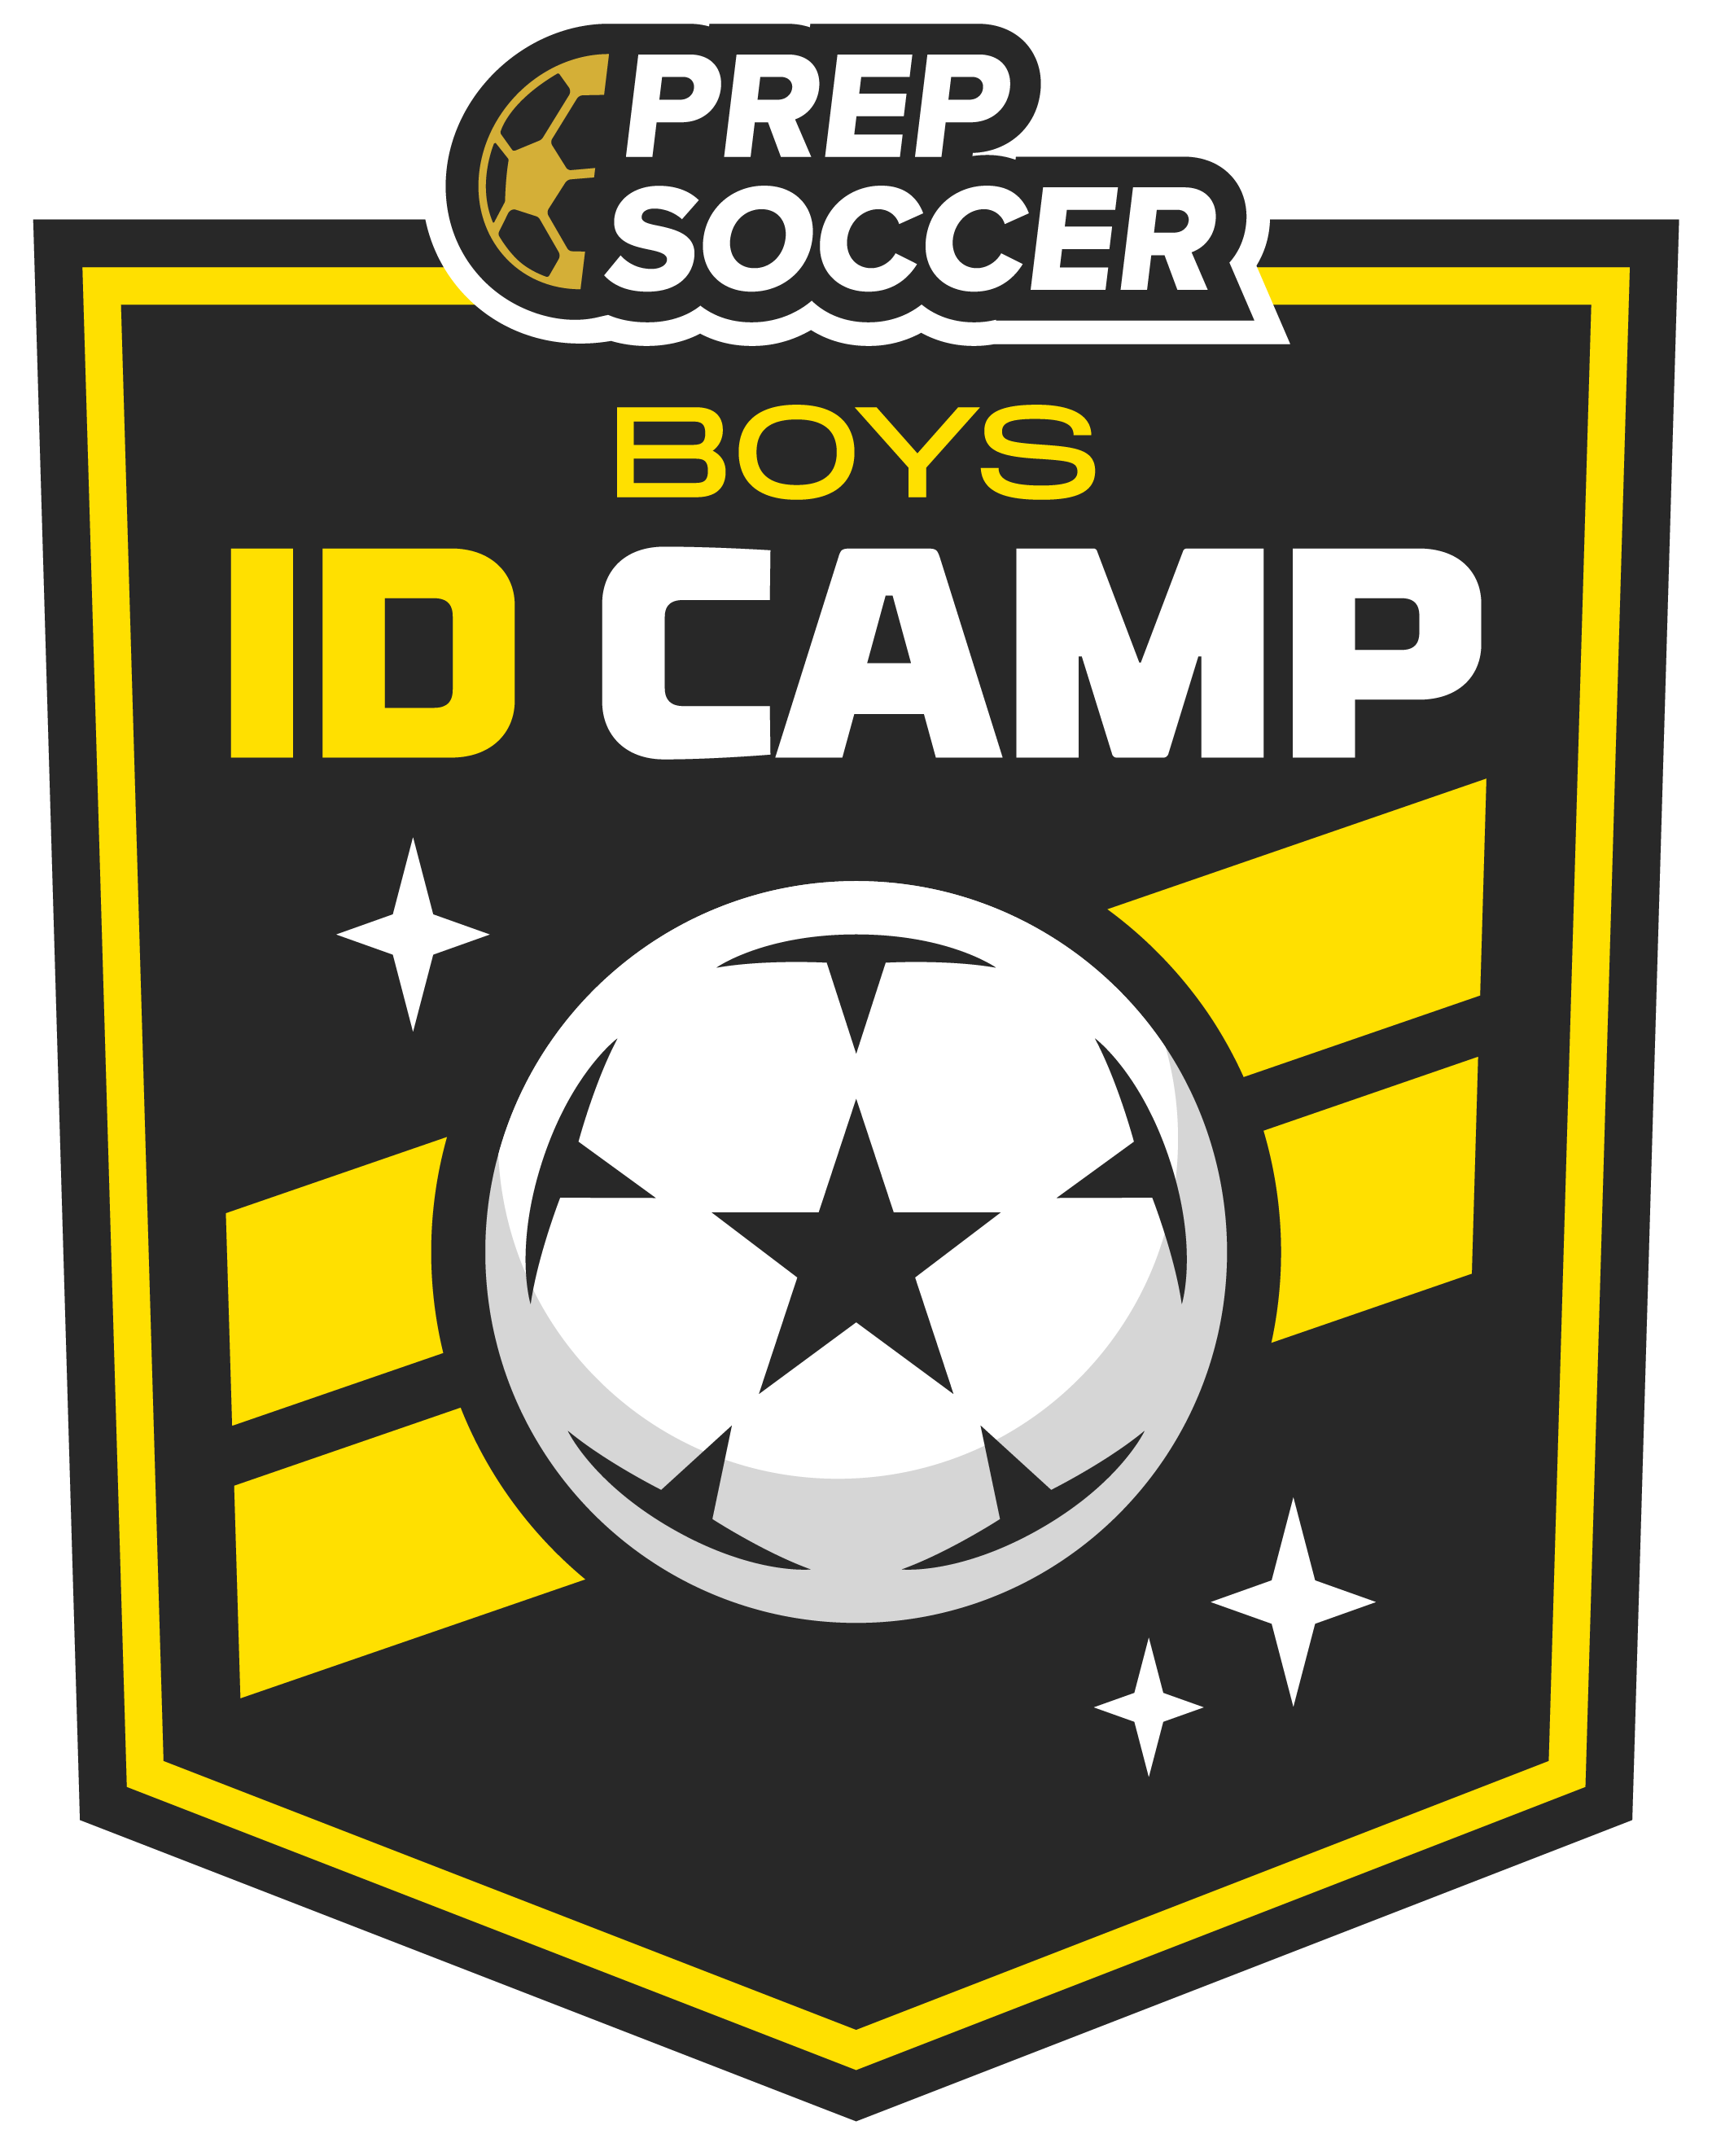 Prep Soccer Boys ID Camp: California